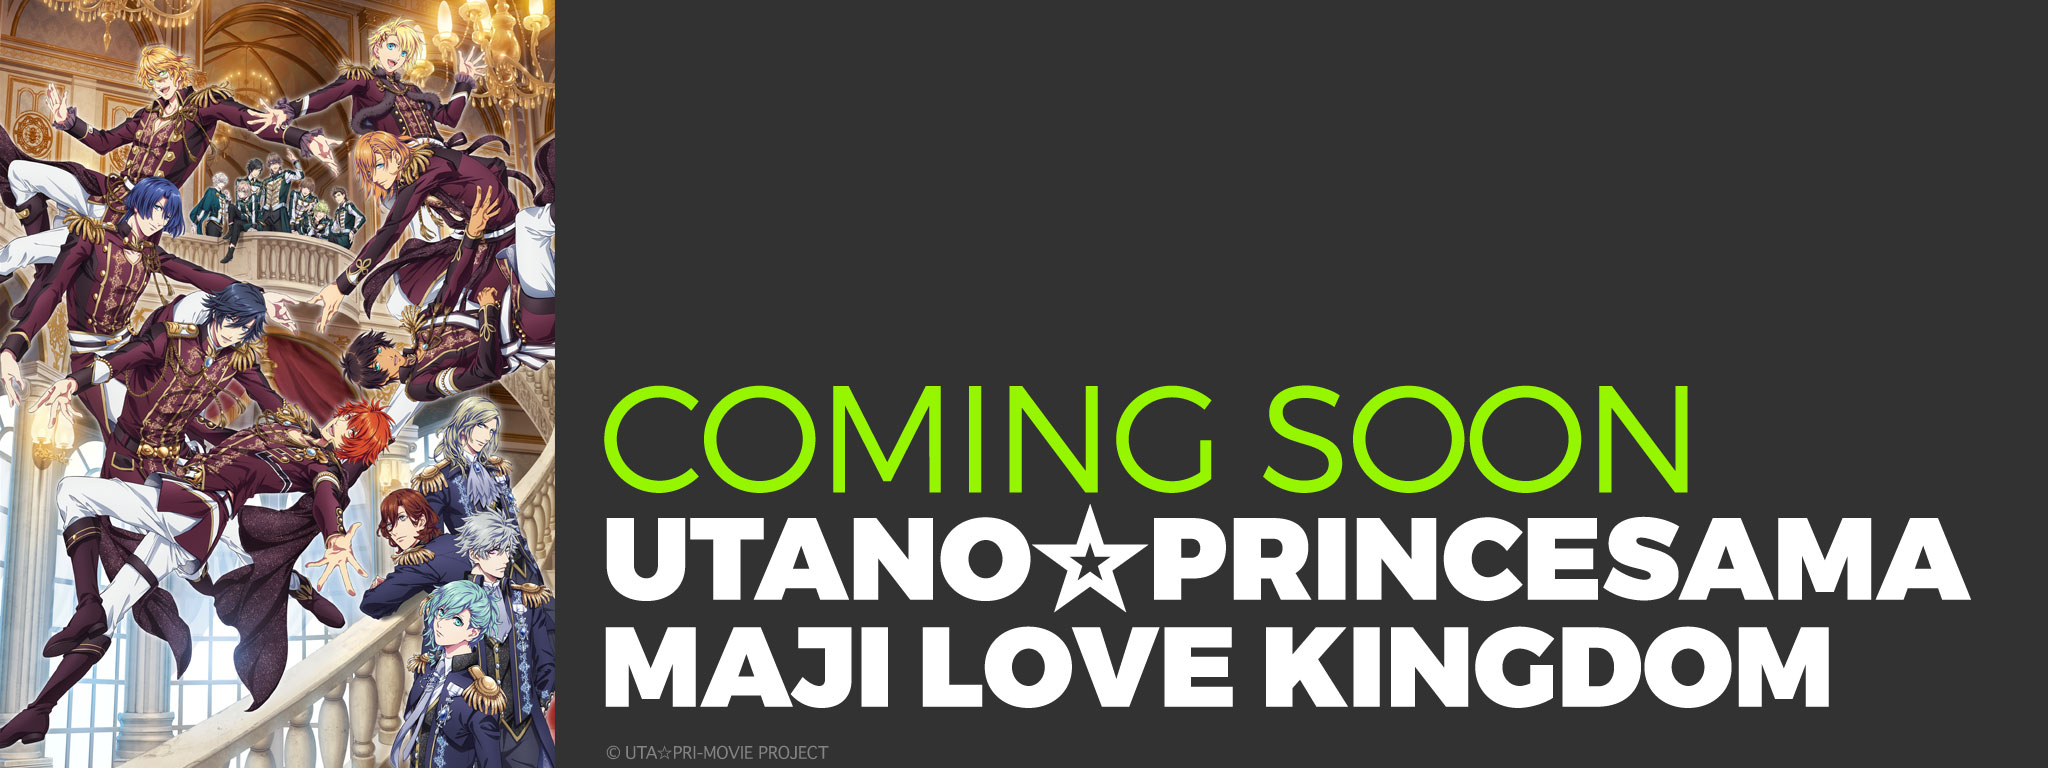 Title Art for Utano?Princesama Maji LOVE Kingdom